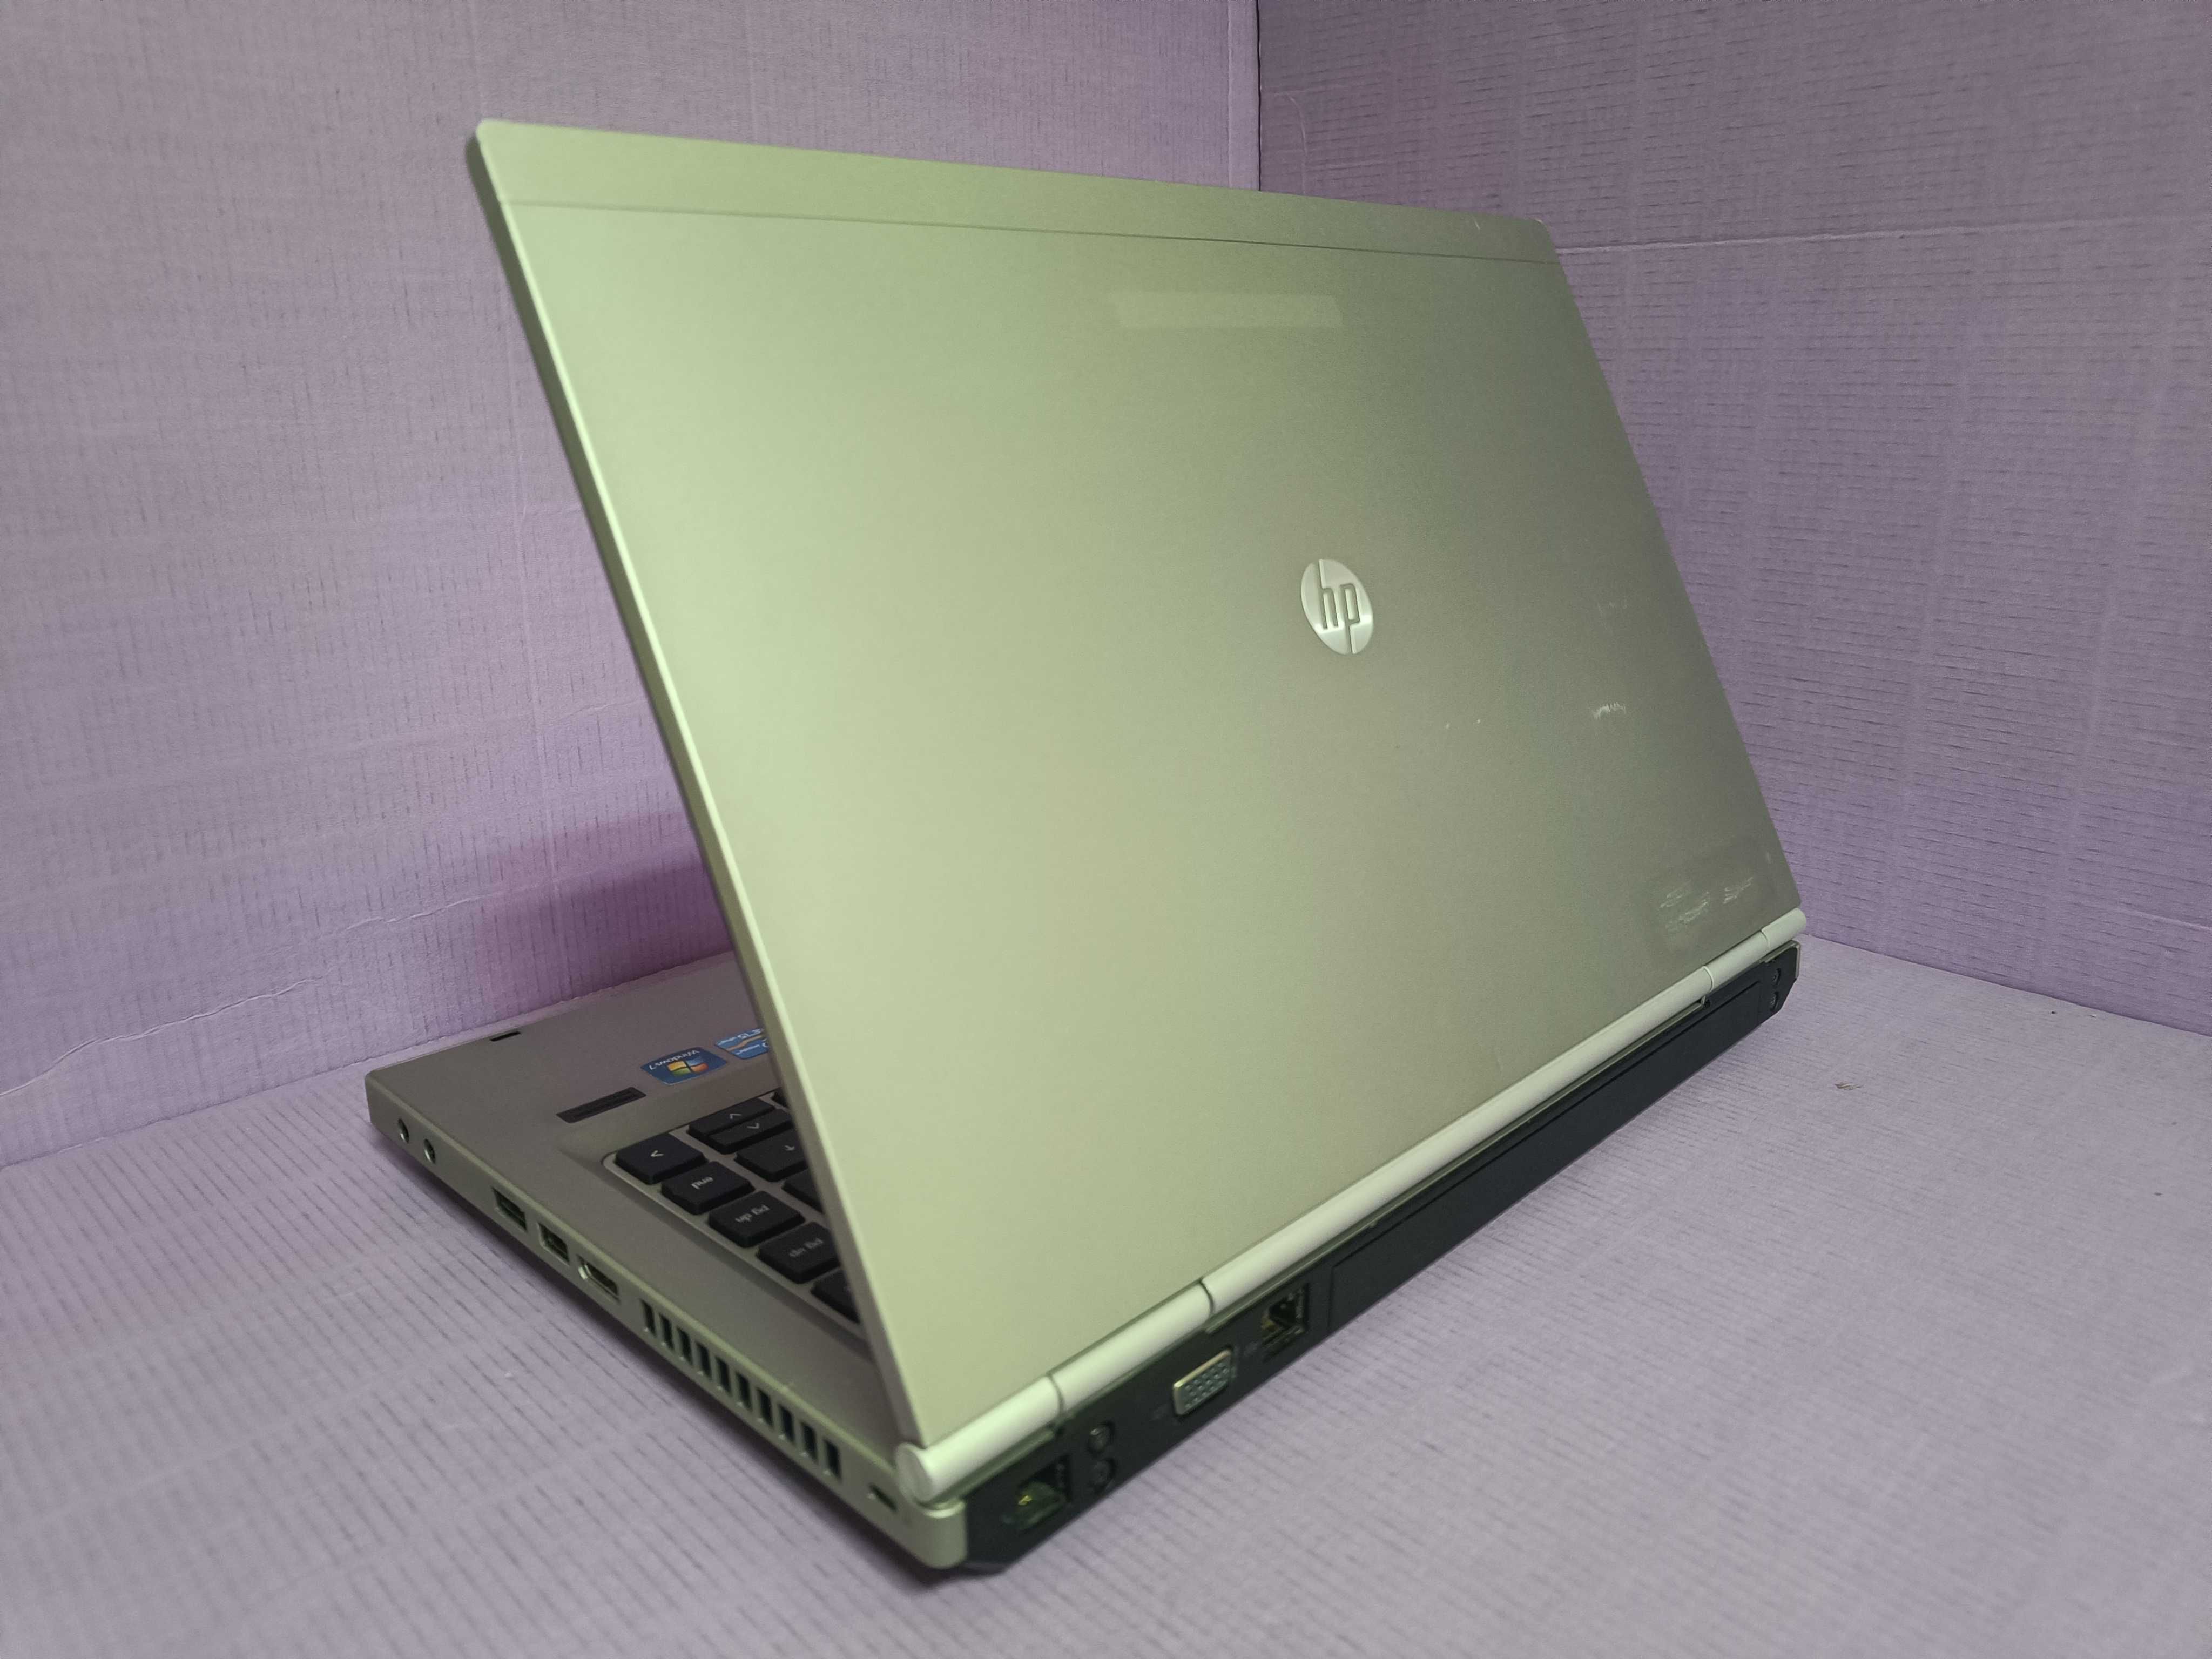 Ноутбук HP EliteBook 8460P i5-2540M/8Gb DDR/SSD 128Gb/14.0”